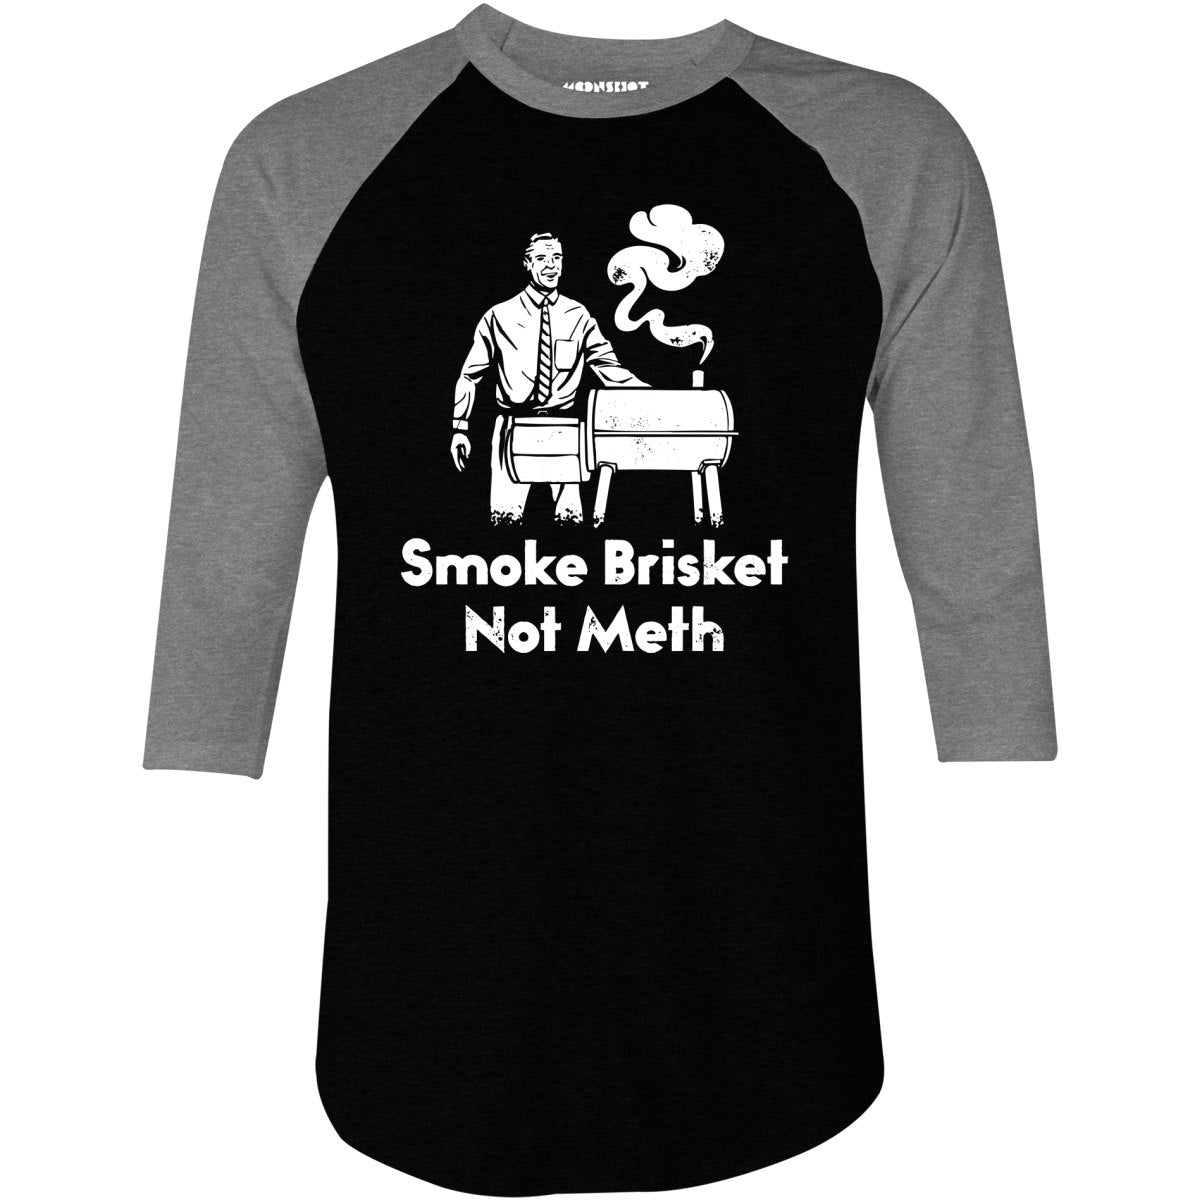 Smoke Brisket Not Meth - 3/4 Sleeve Raglan T-Shirt